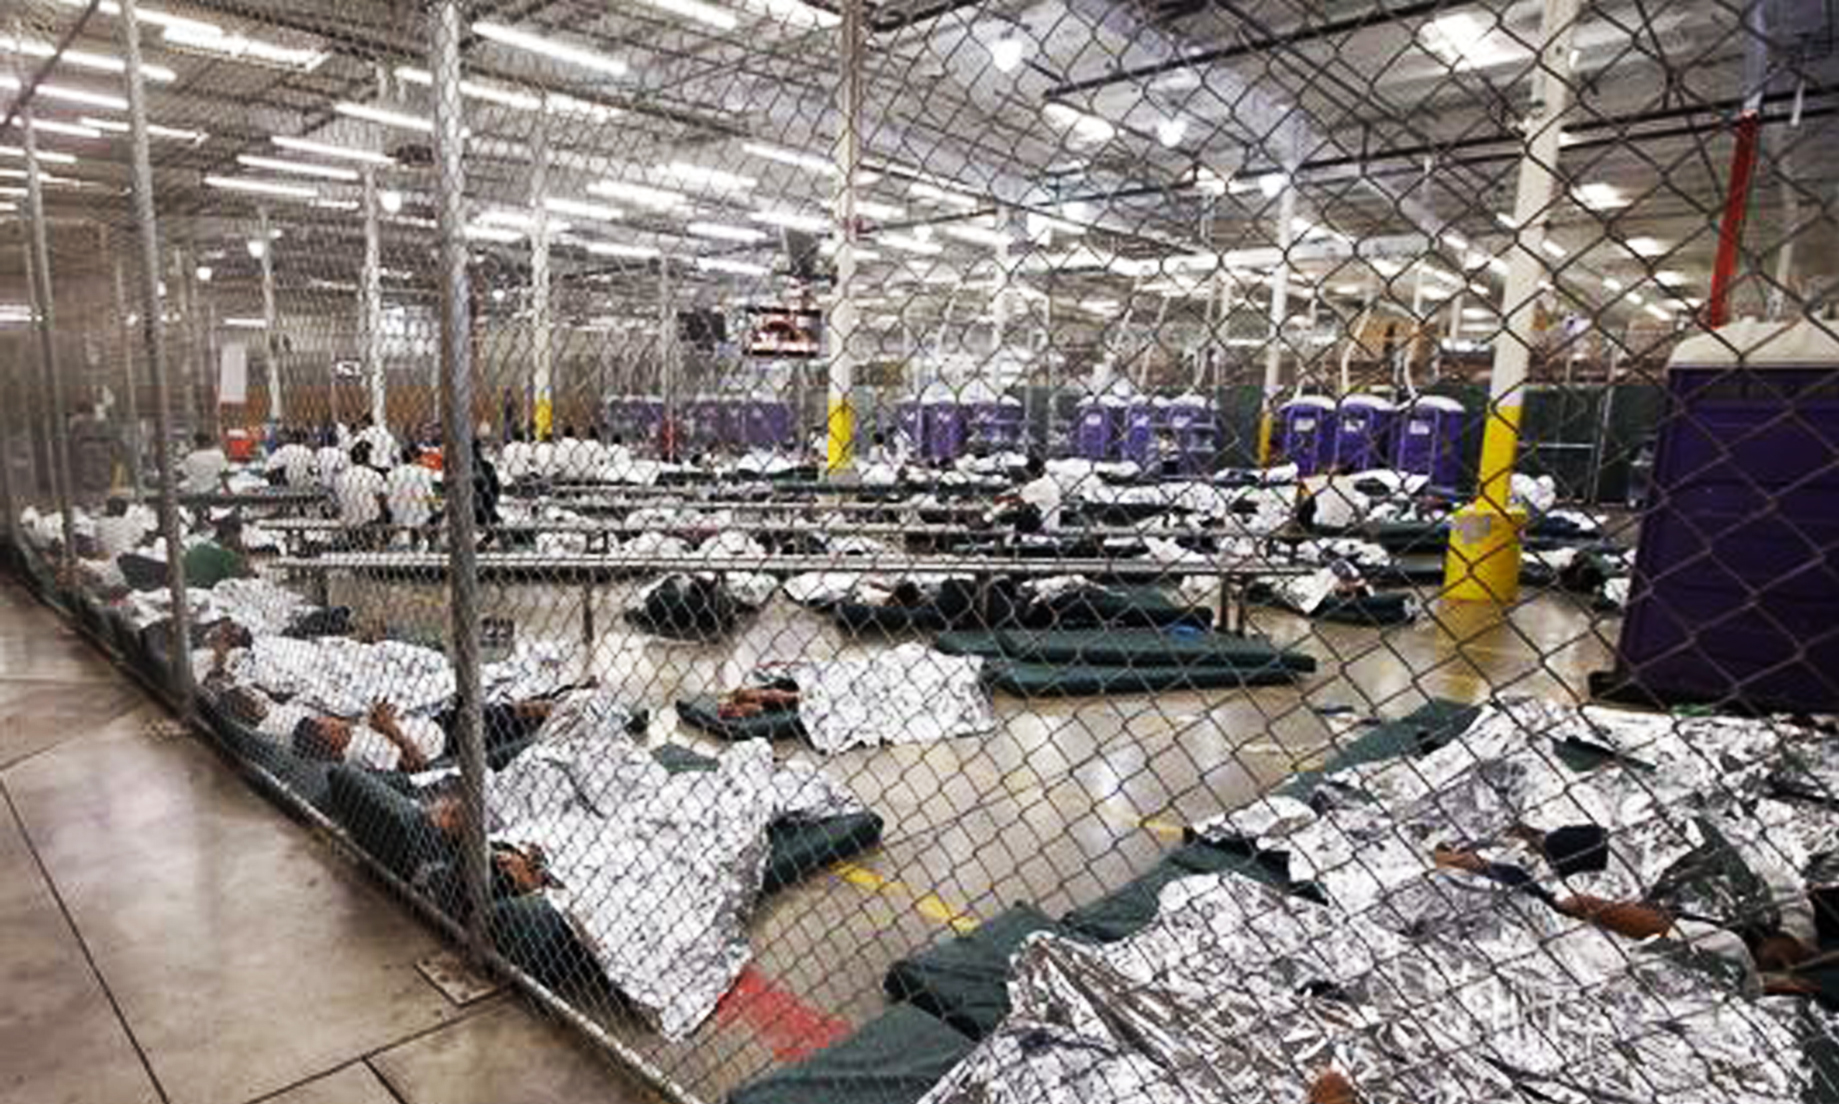 US-Mexico border: ‘Dangerous overcrowding’ decried at Texas migrant detention centers